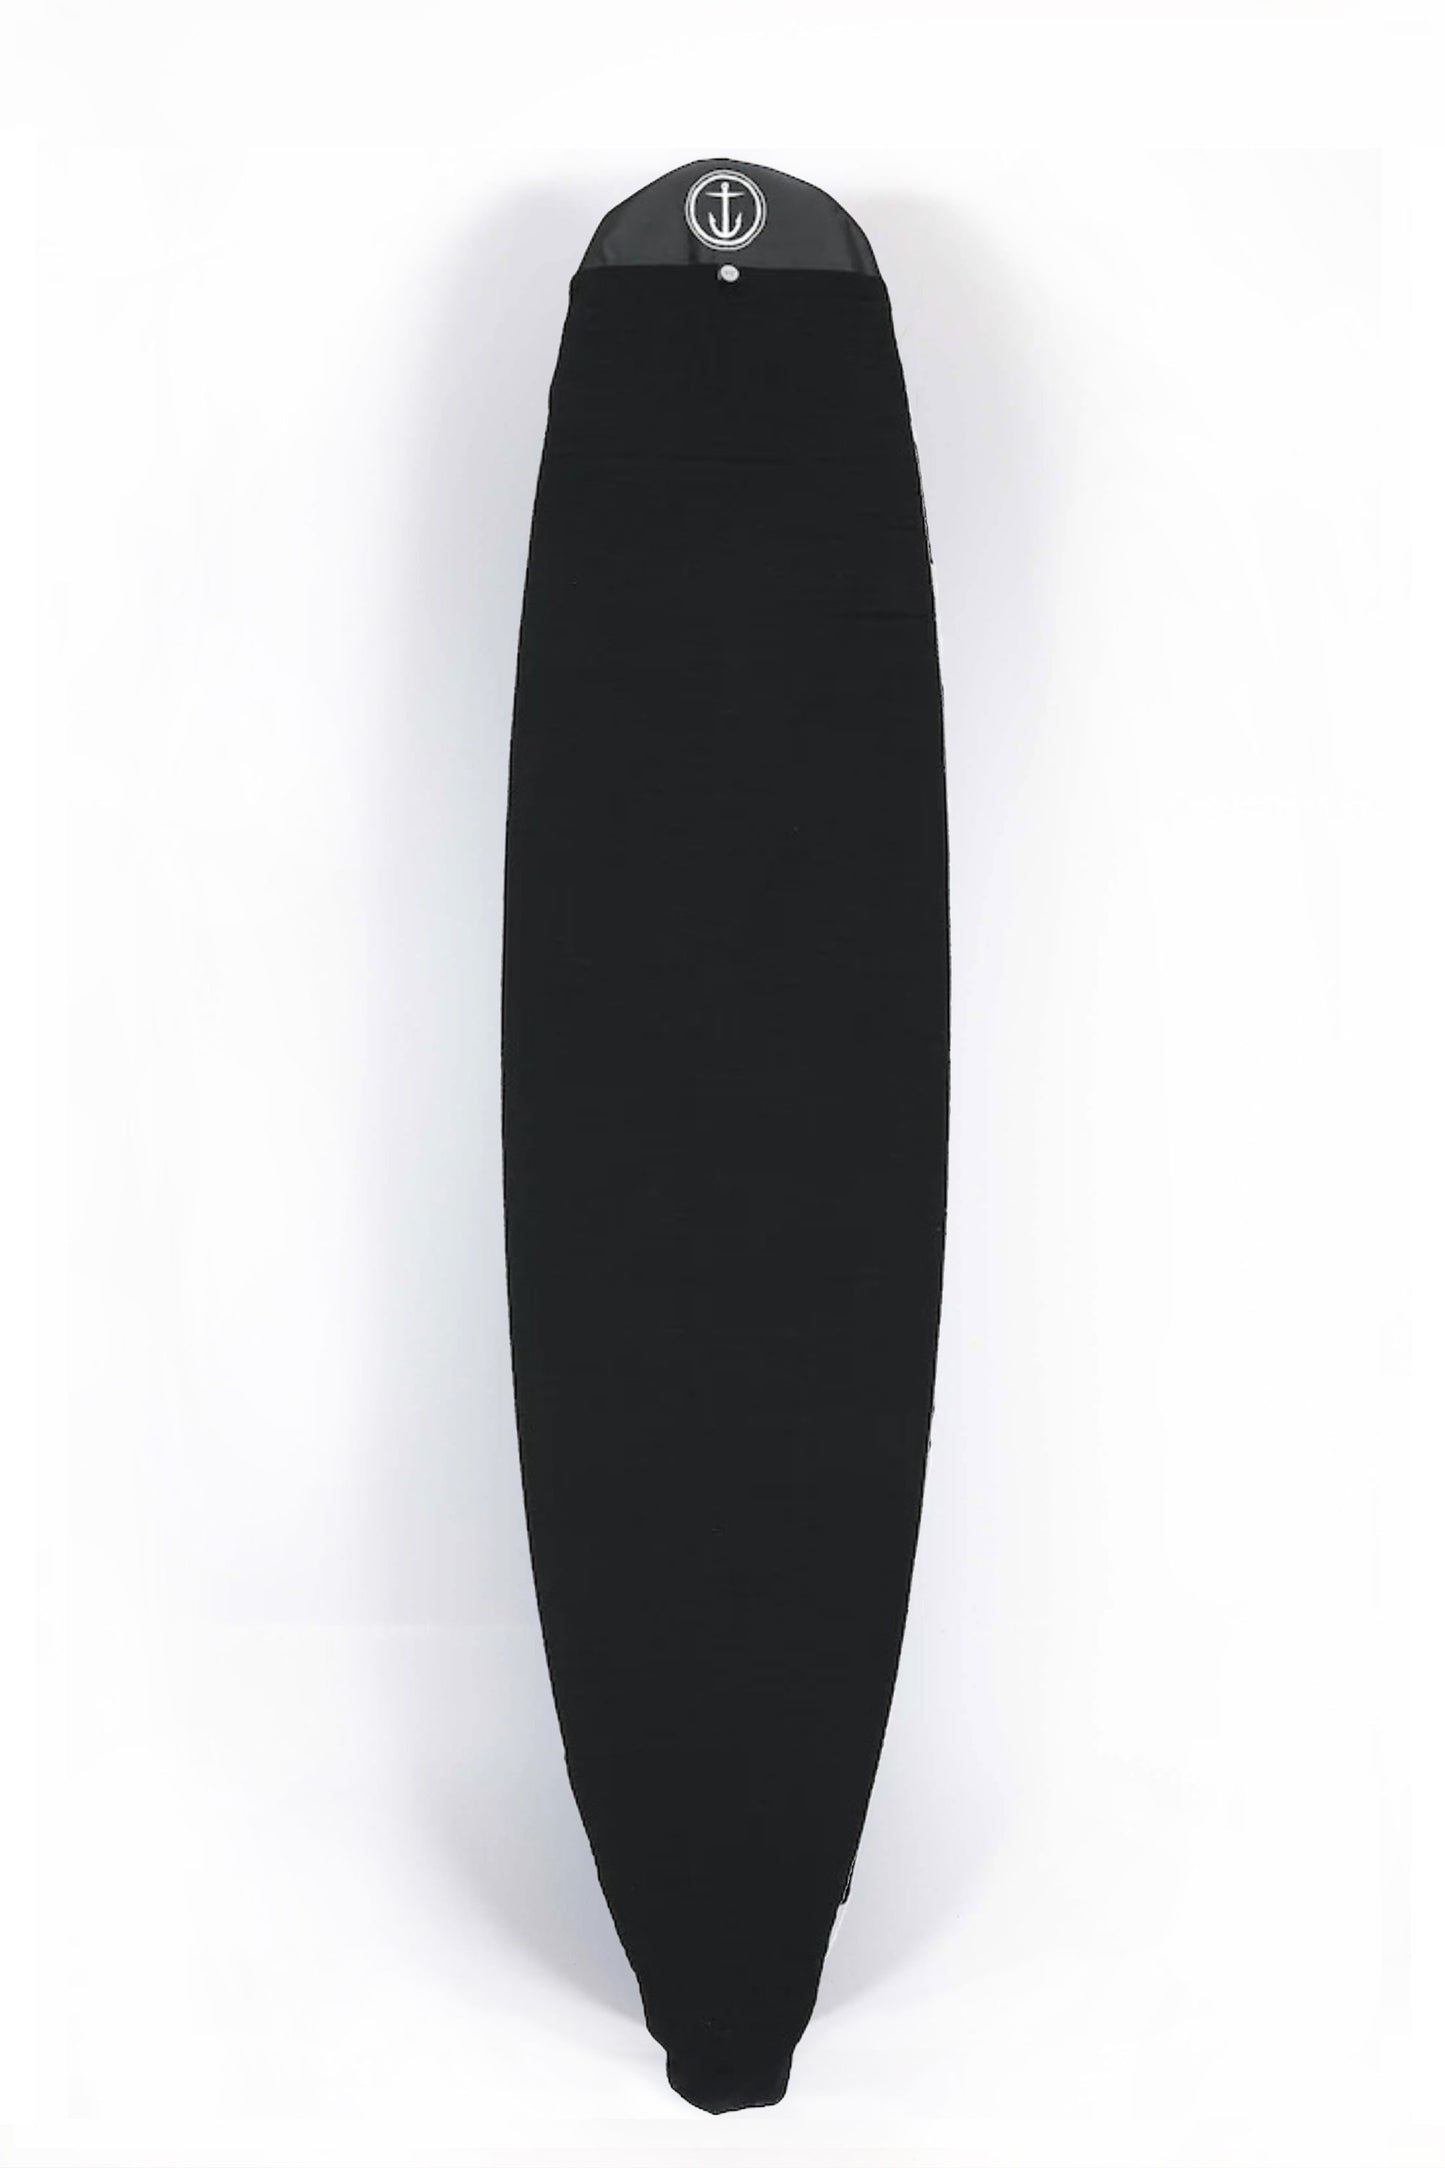 pukas-surf-shop-captain-fin-boardbag-sock-9-3-longboard-black